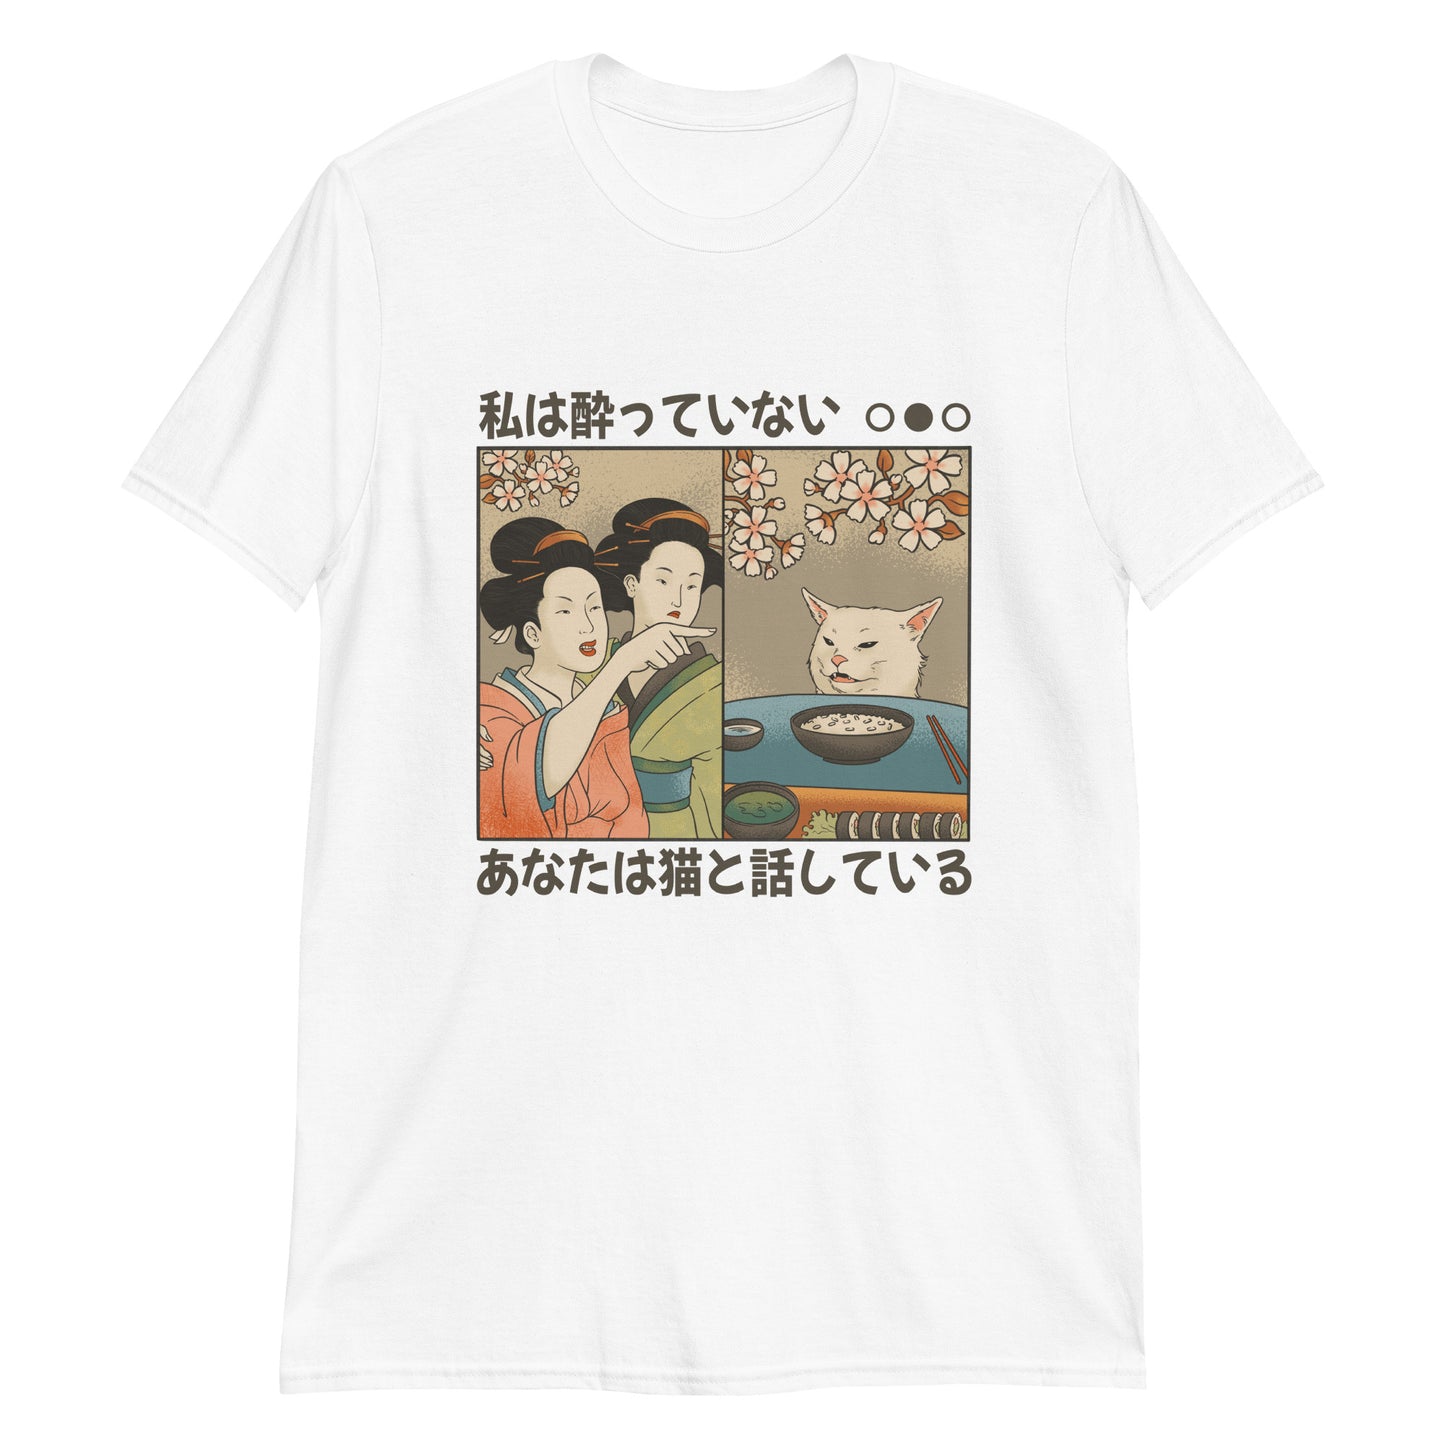 Japanese Aesthetic, Meme, Woman Shouting On Cat T-Shirt